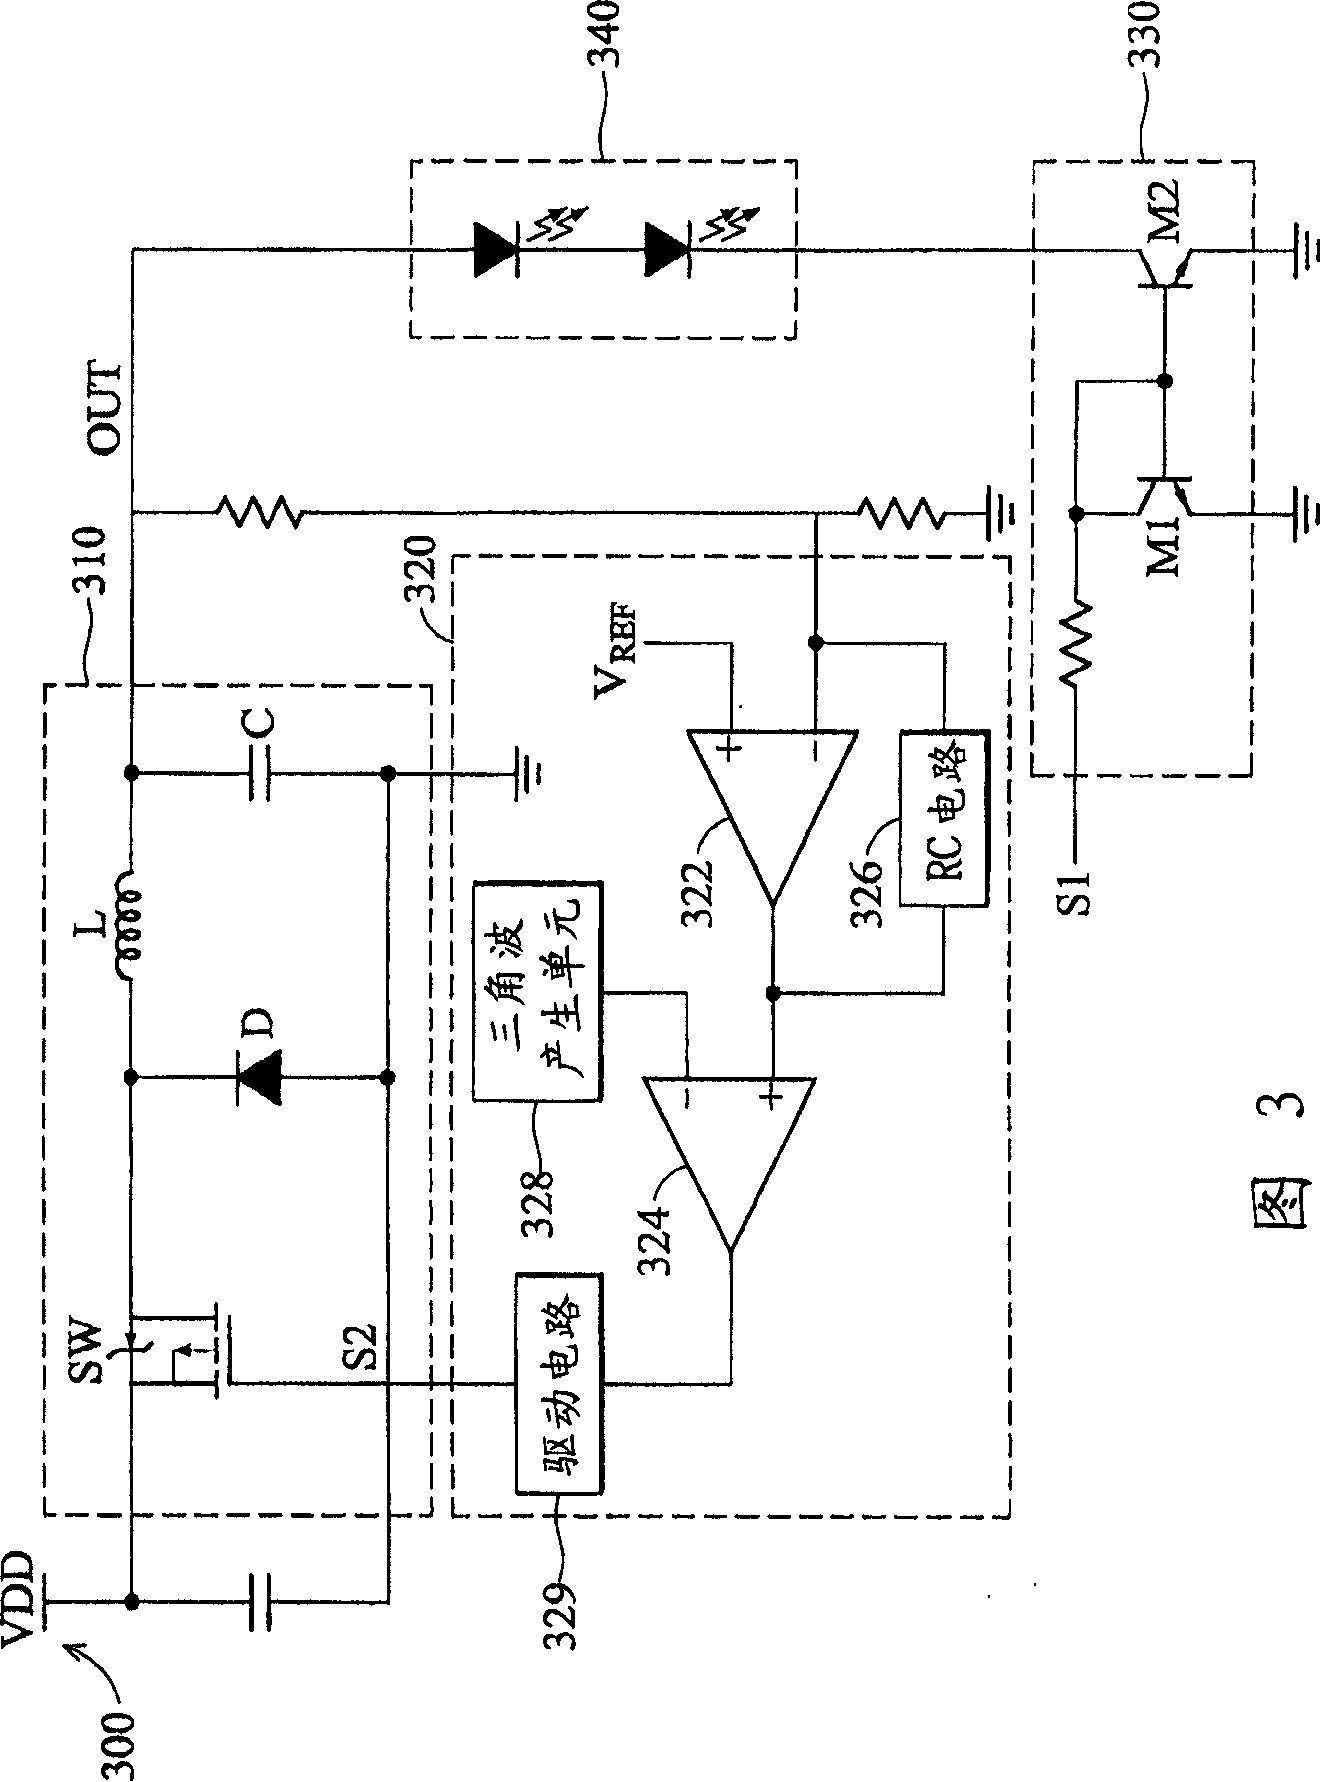 Control circuit